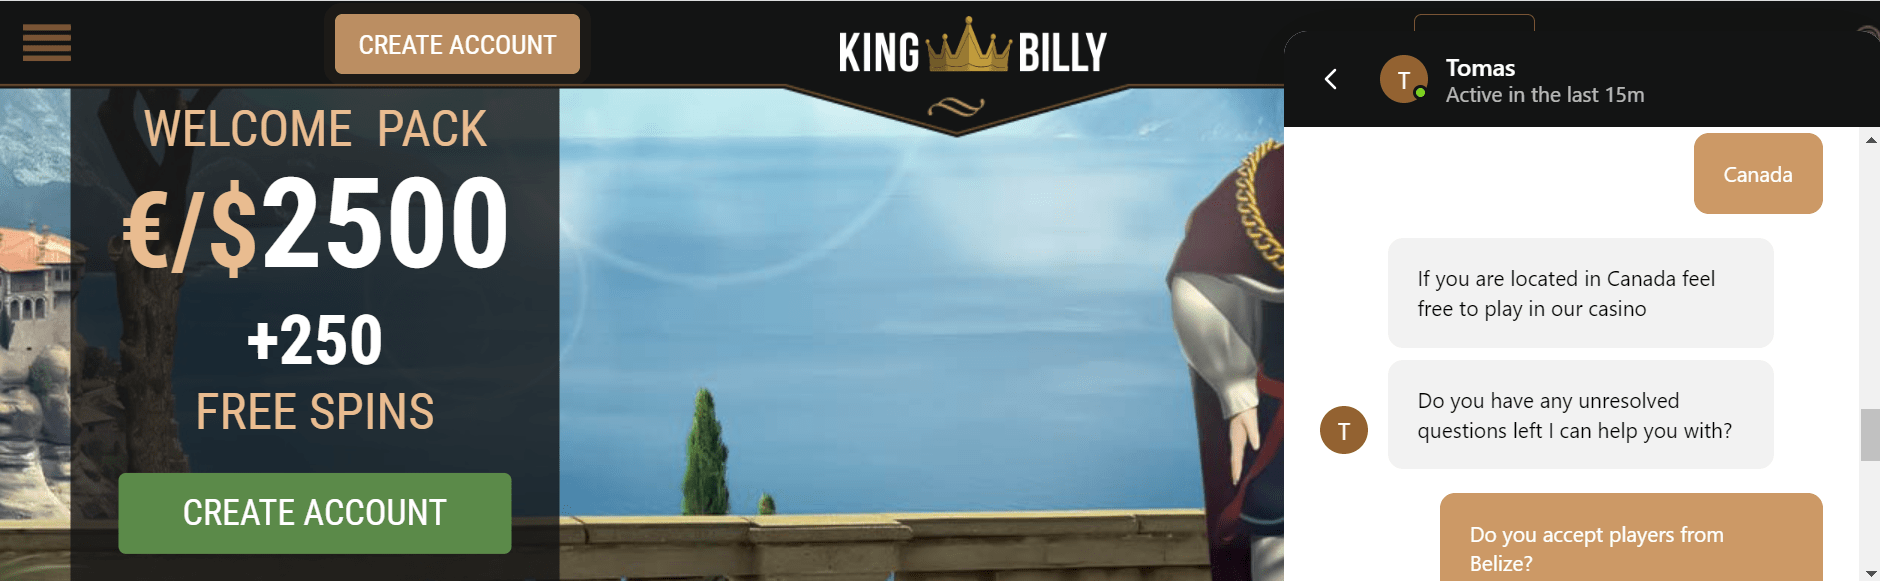 kingbilly customer support